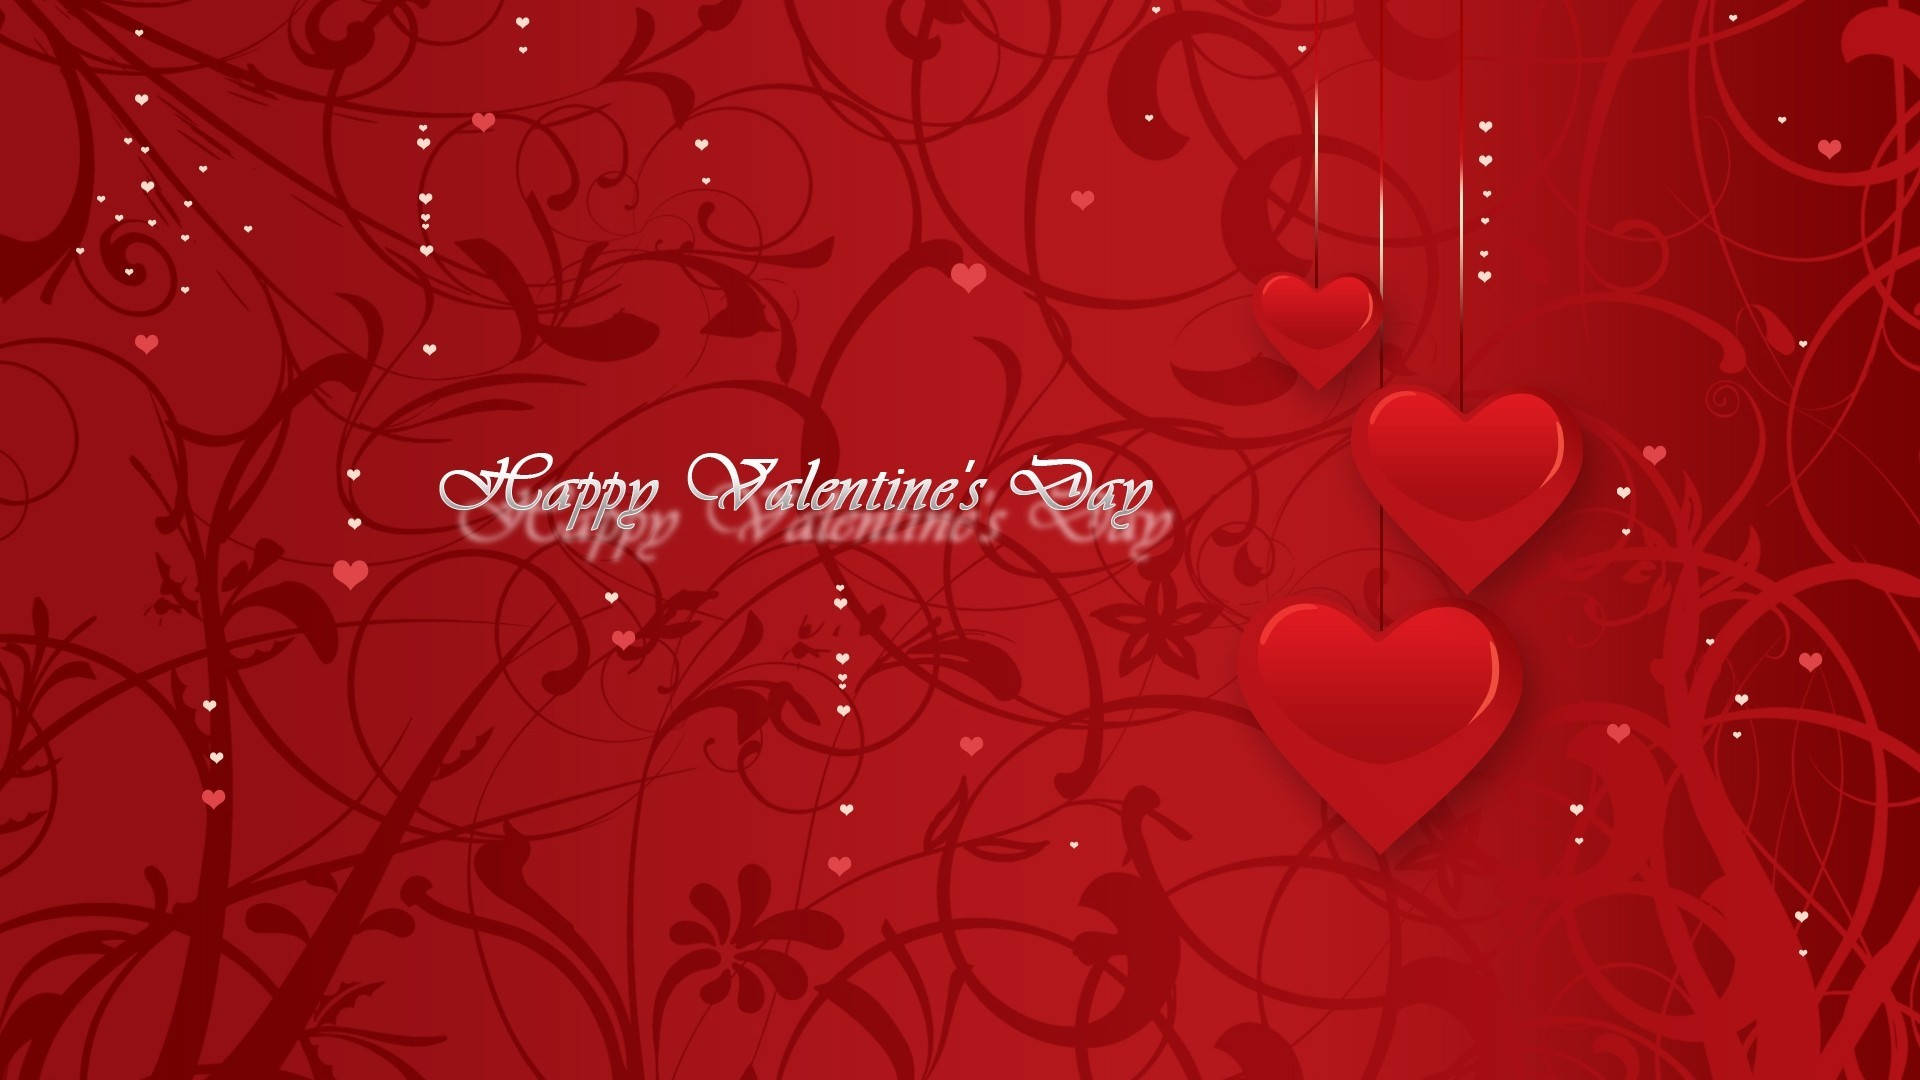 Happy Valentine’s Day Decorative Swirls Wallpaper